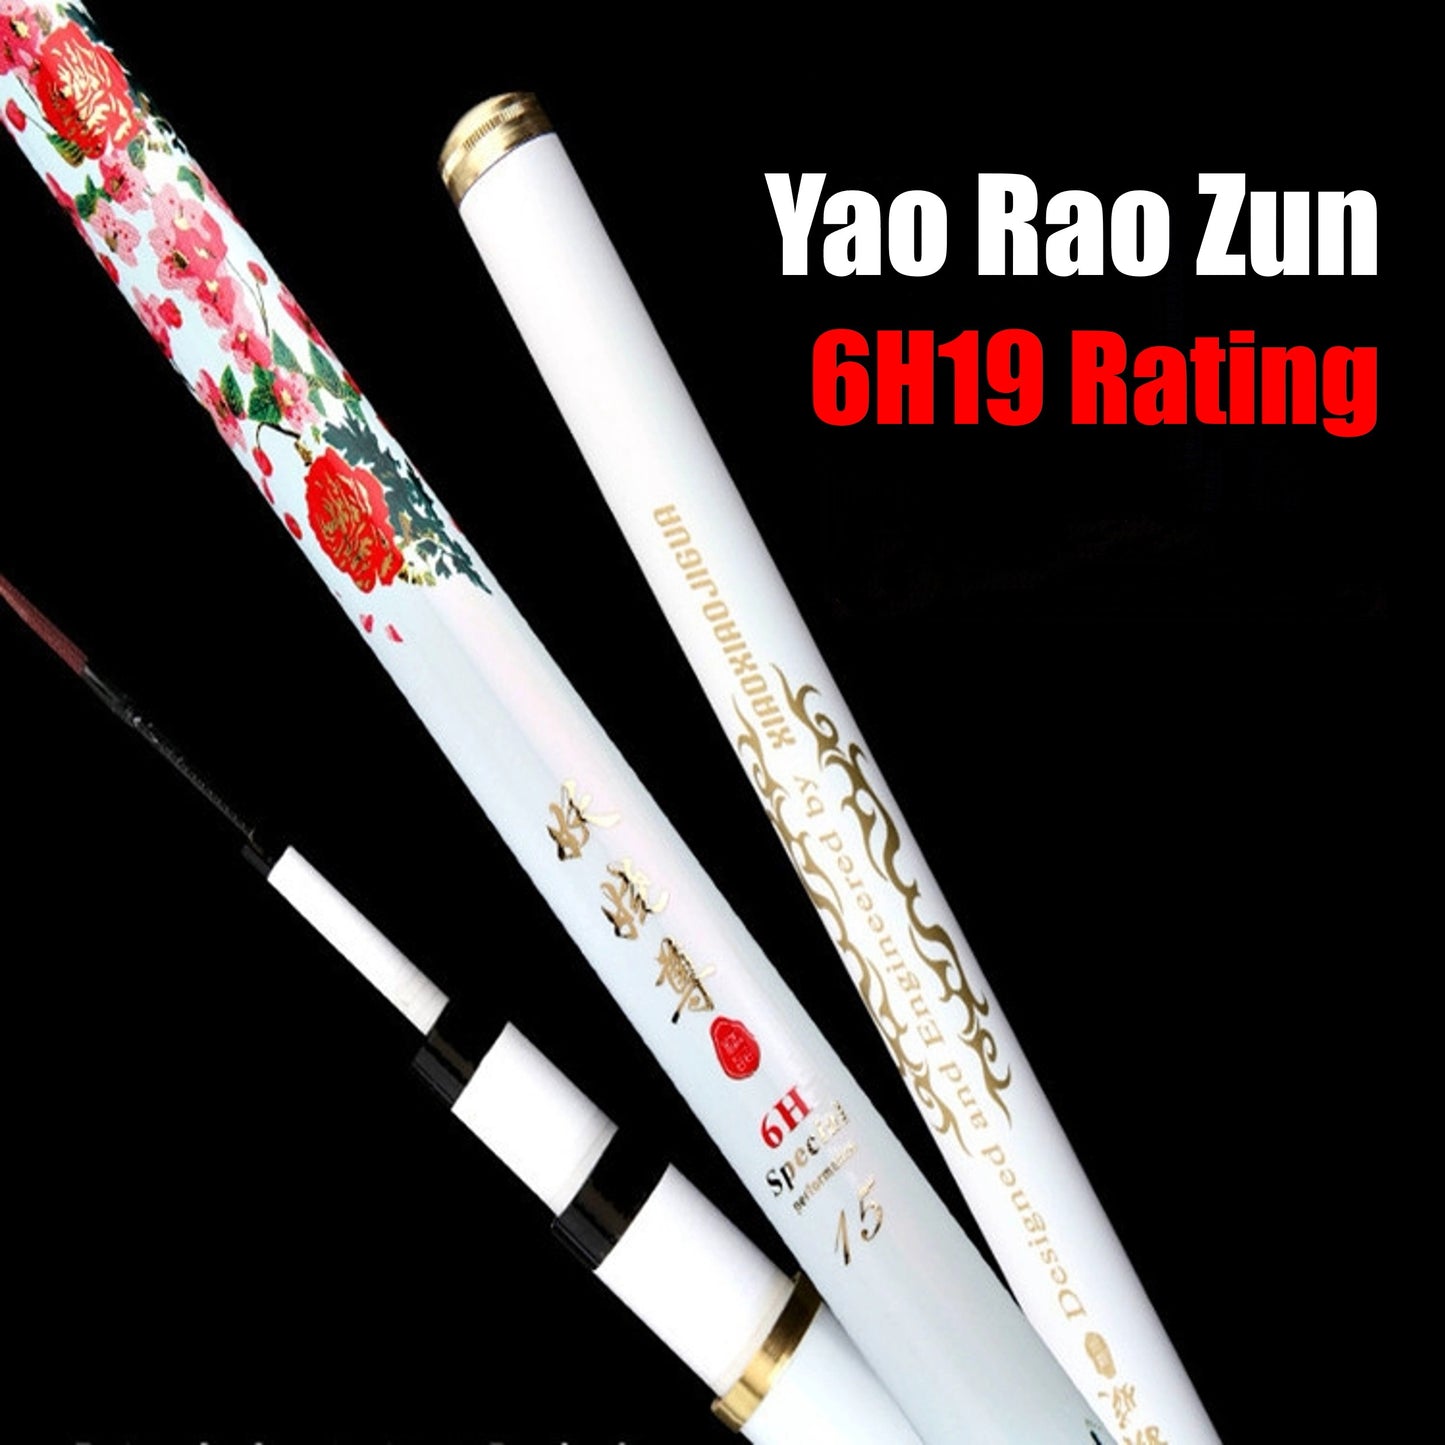 Yao Rao Zun Pole Rod 6H19 Rating PR002